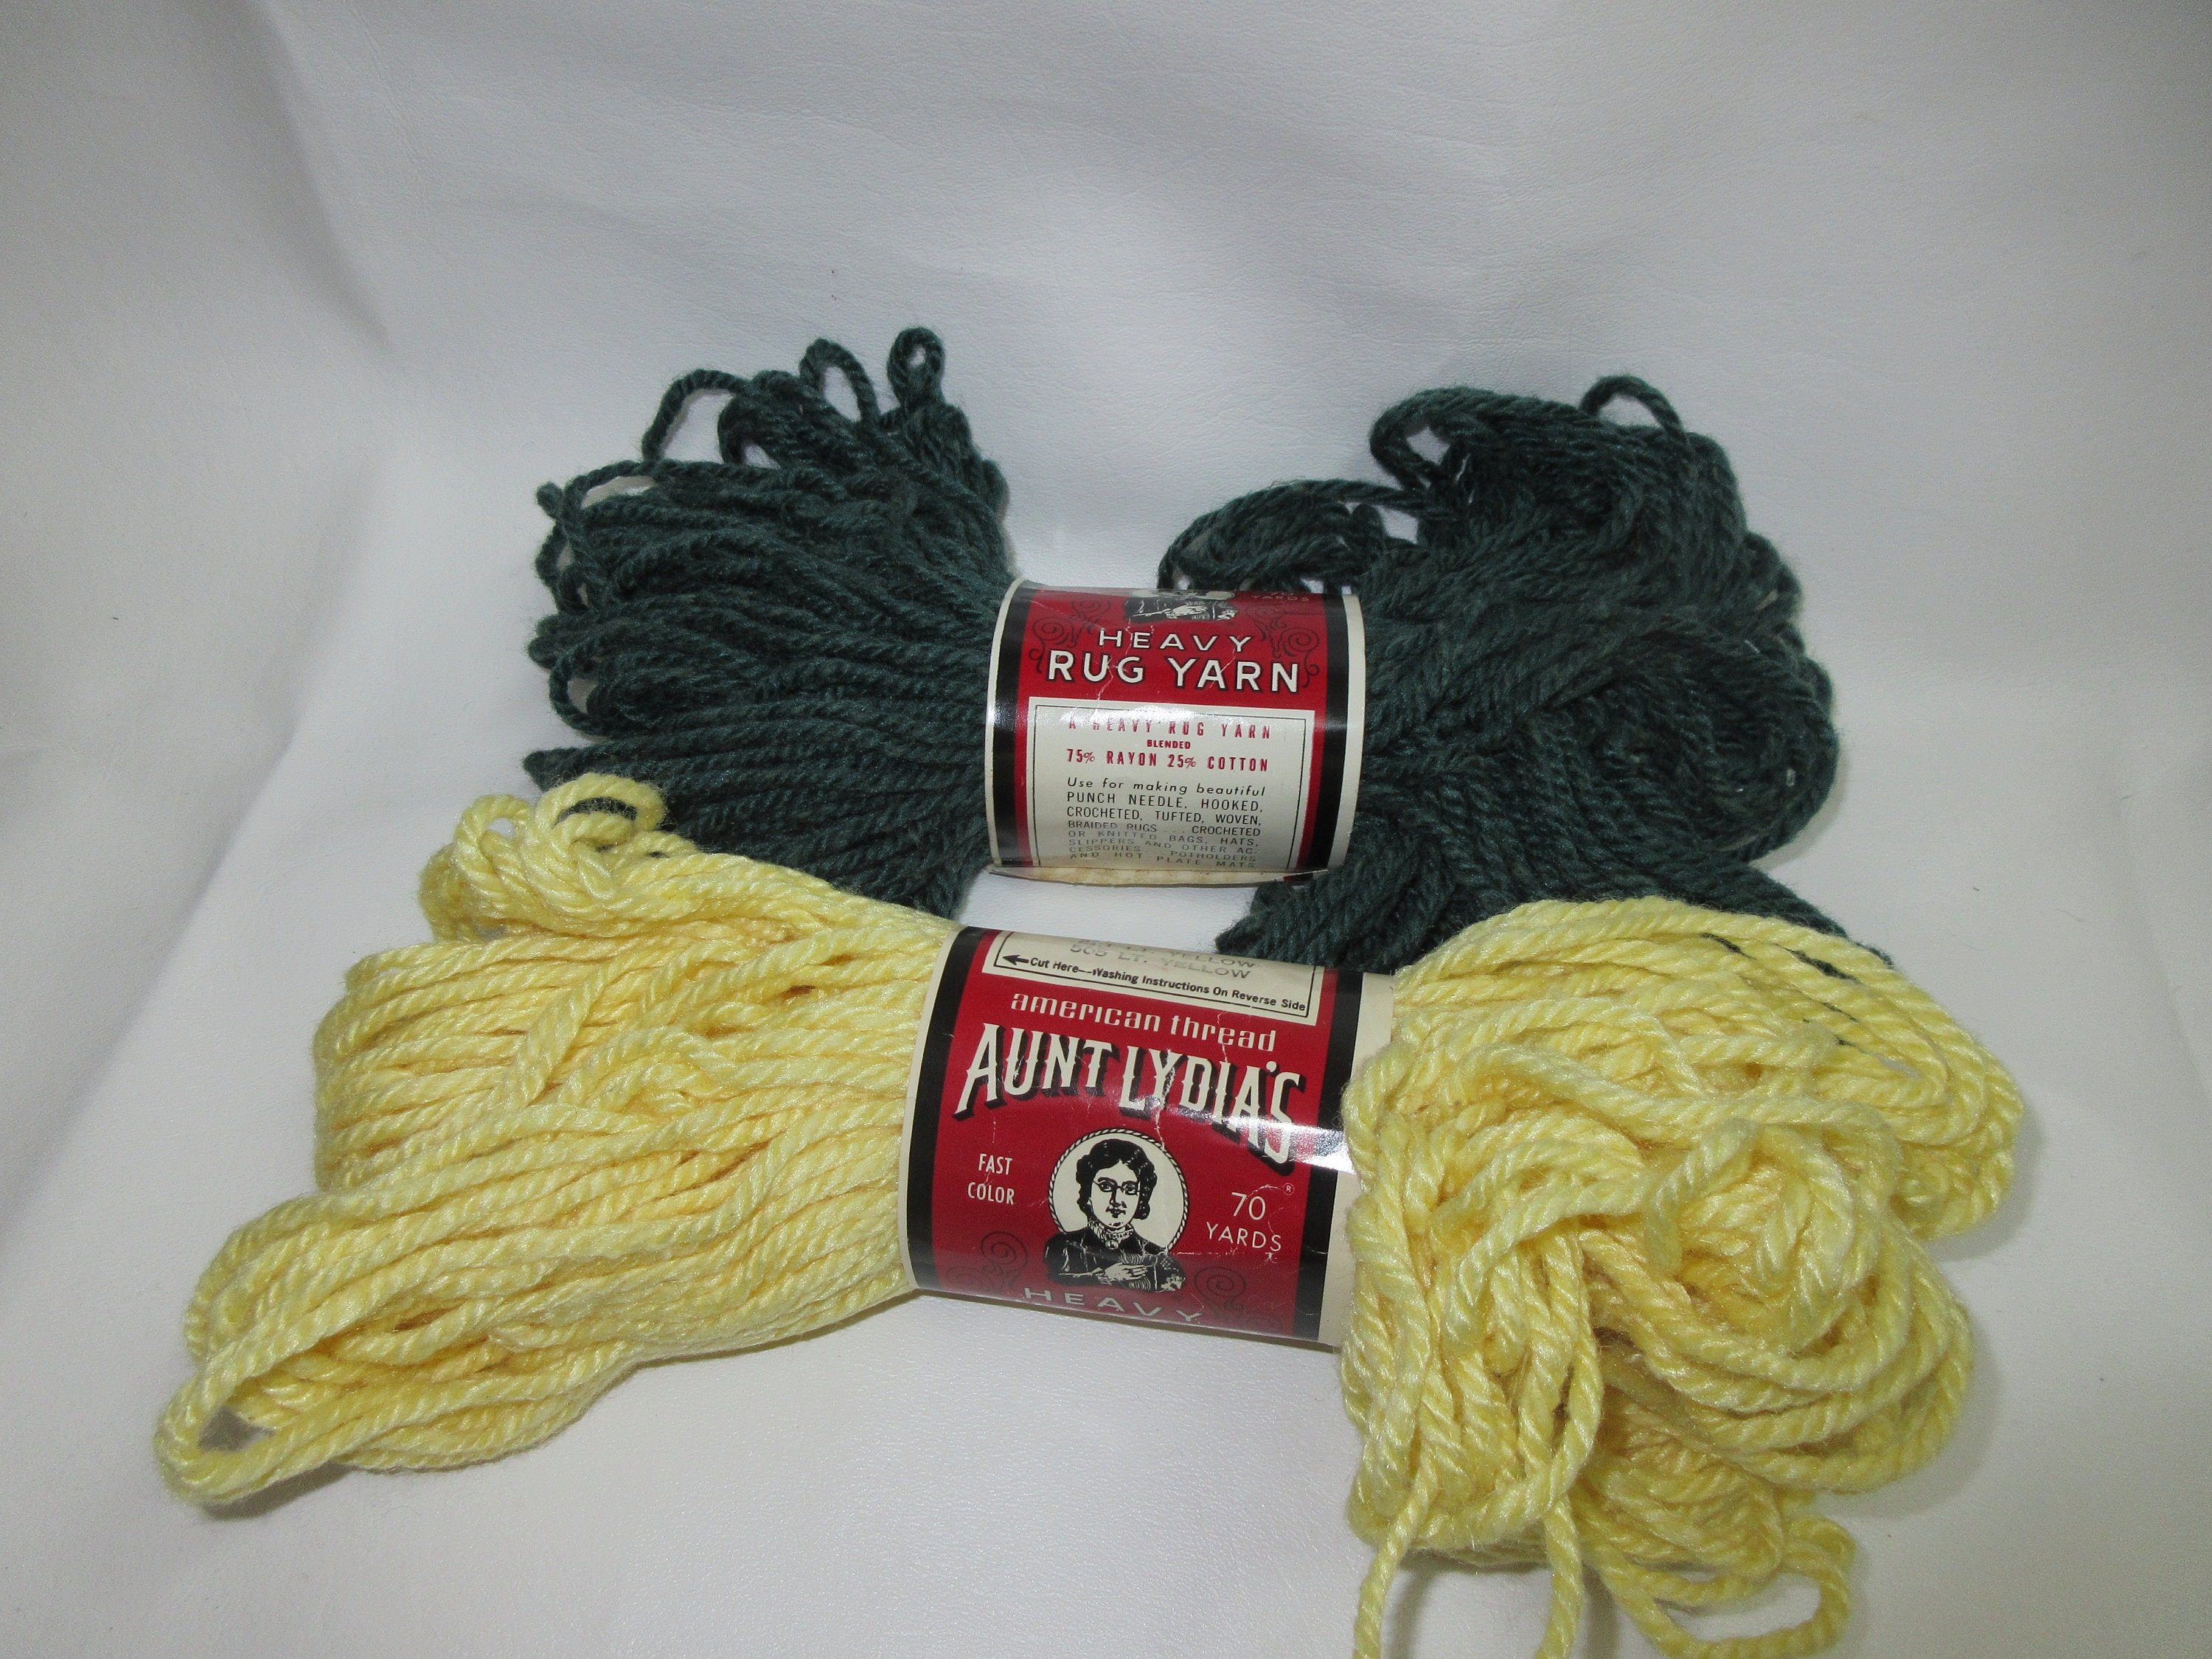 GOLDEN YELLOW - Aunt Lydia's Classic 10 Crochet Thread. Item #154-0422